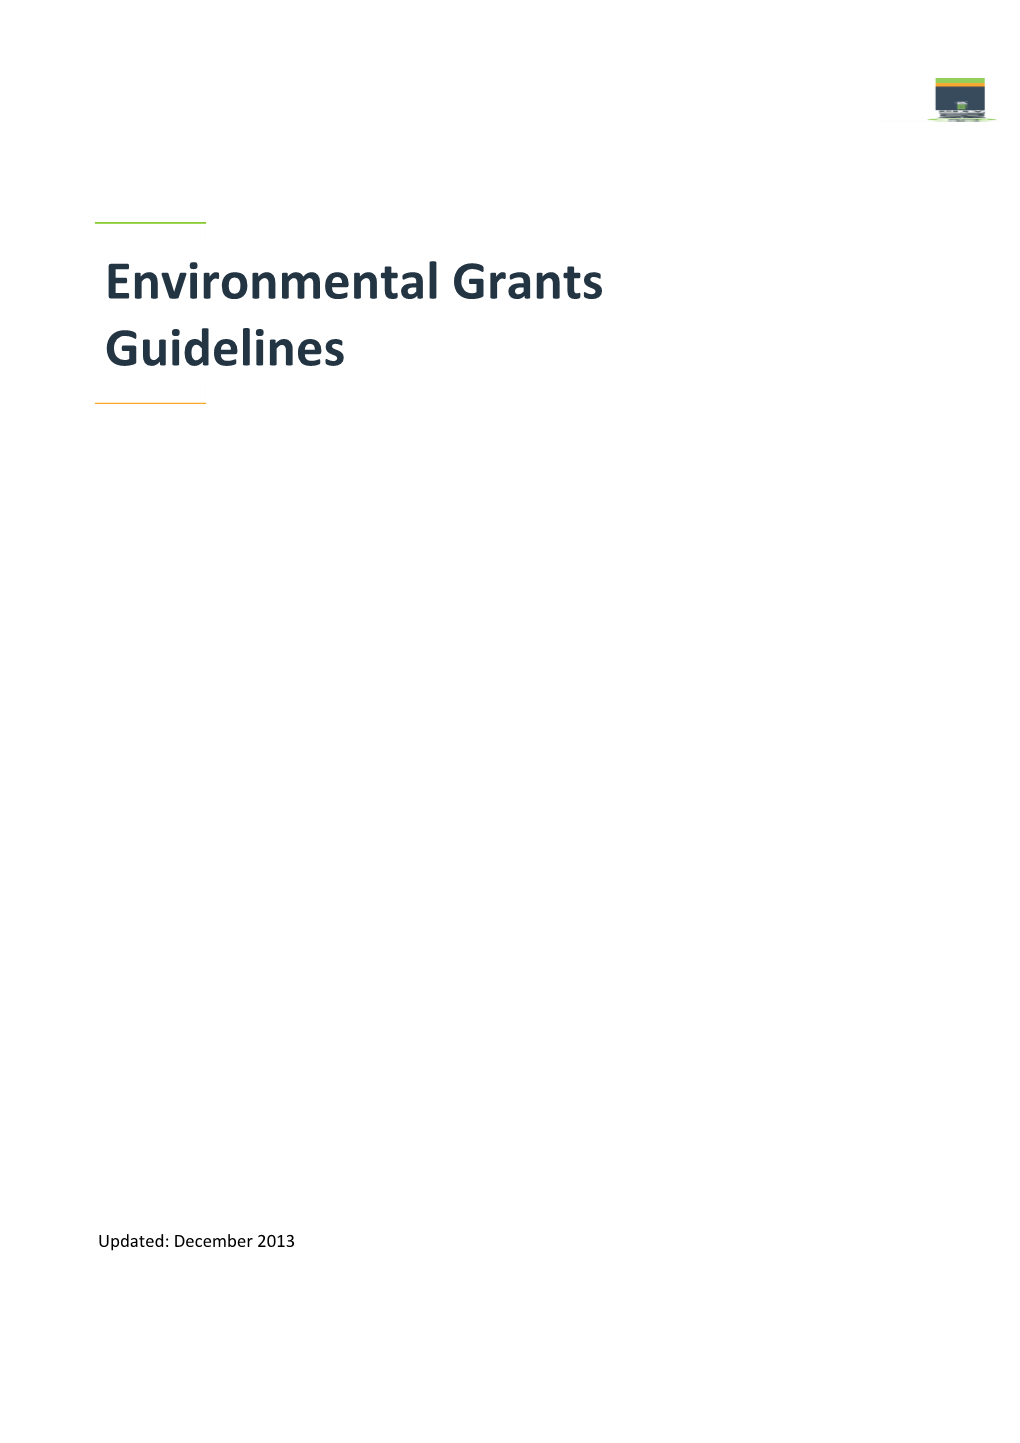 Environmental Grants Program